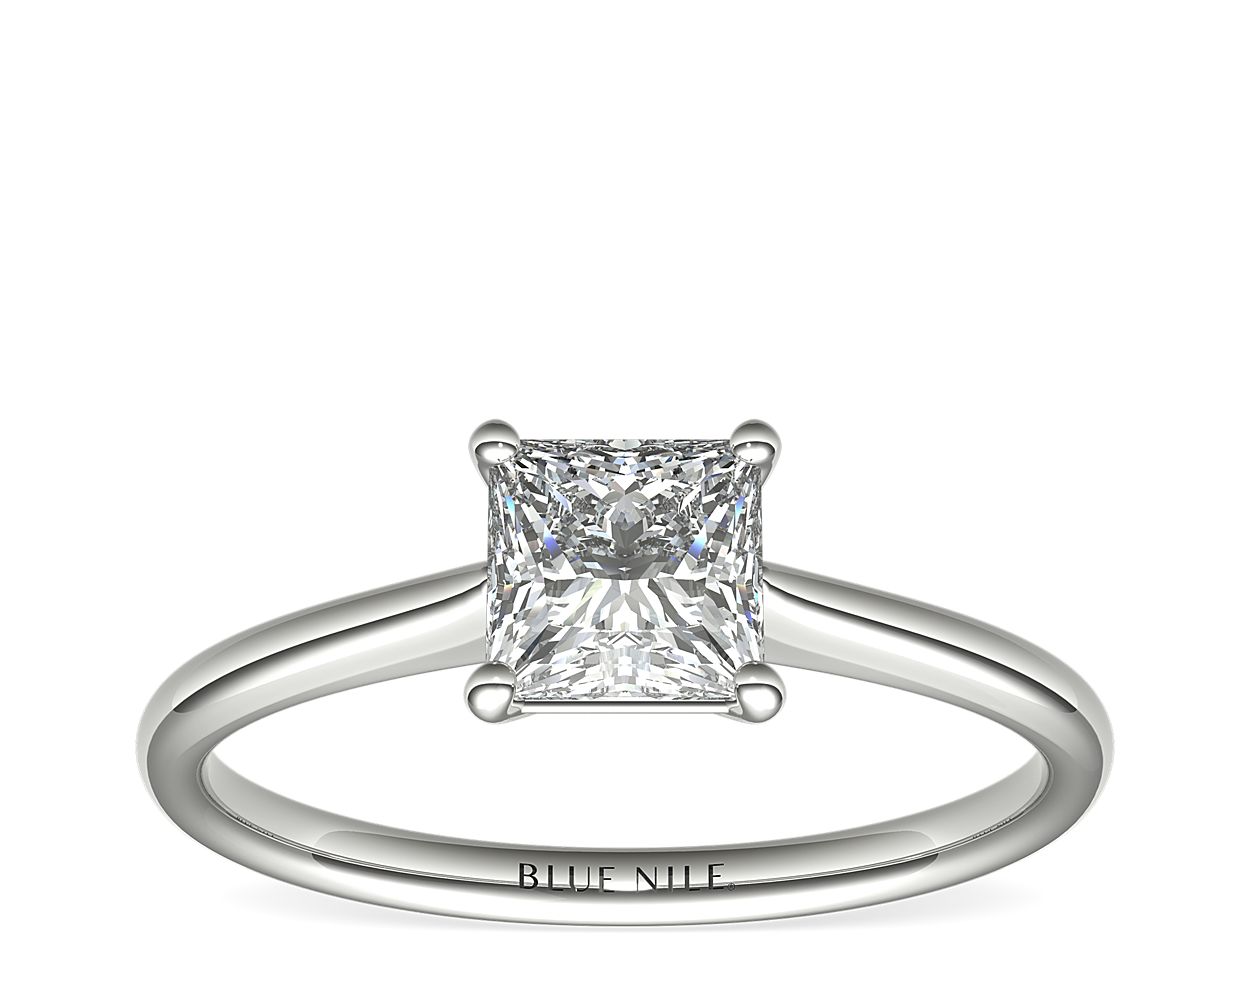 Petite Solitaire Engagement Ring in Platinum 1.01 Carat G-VVS1 Princess Cut Diamond